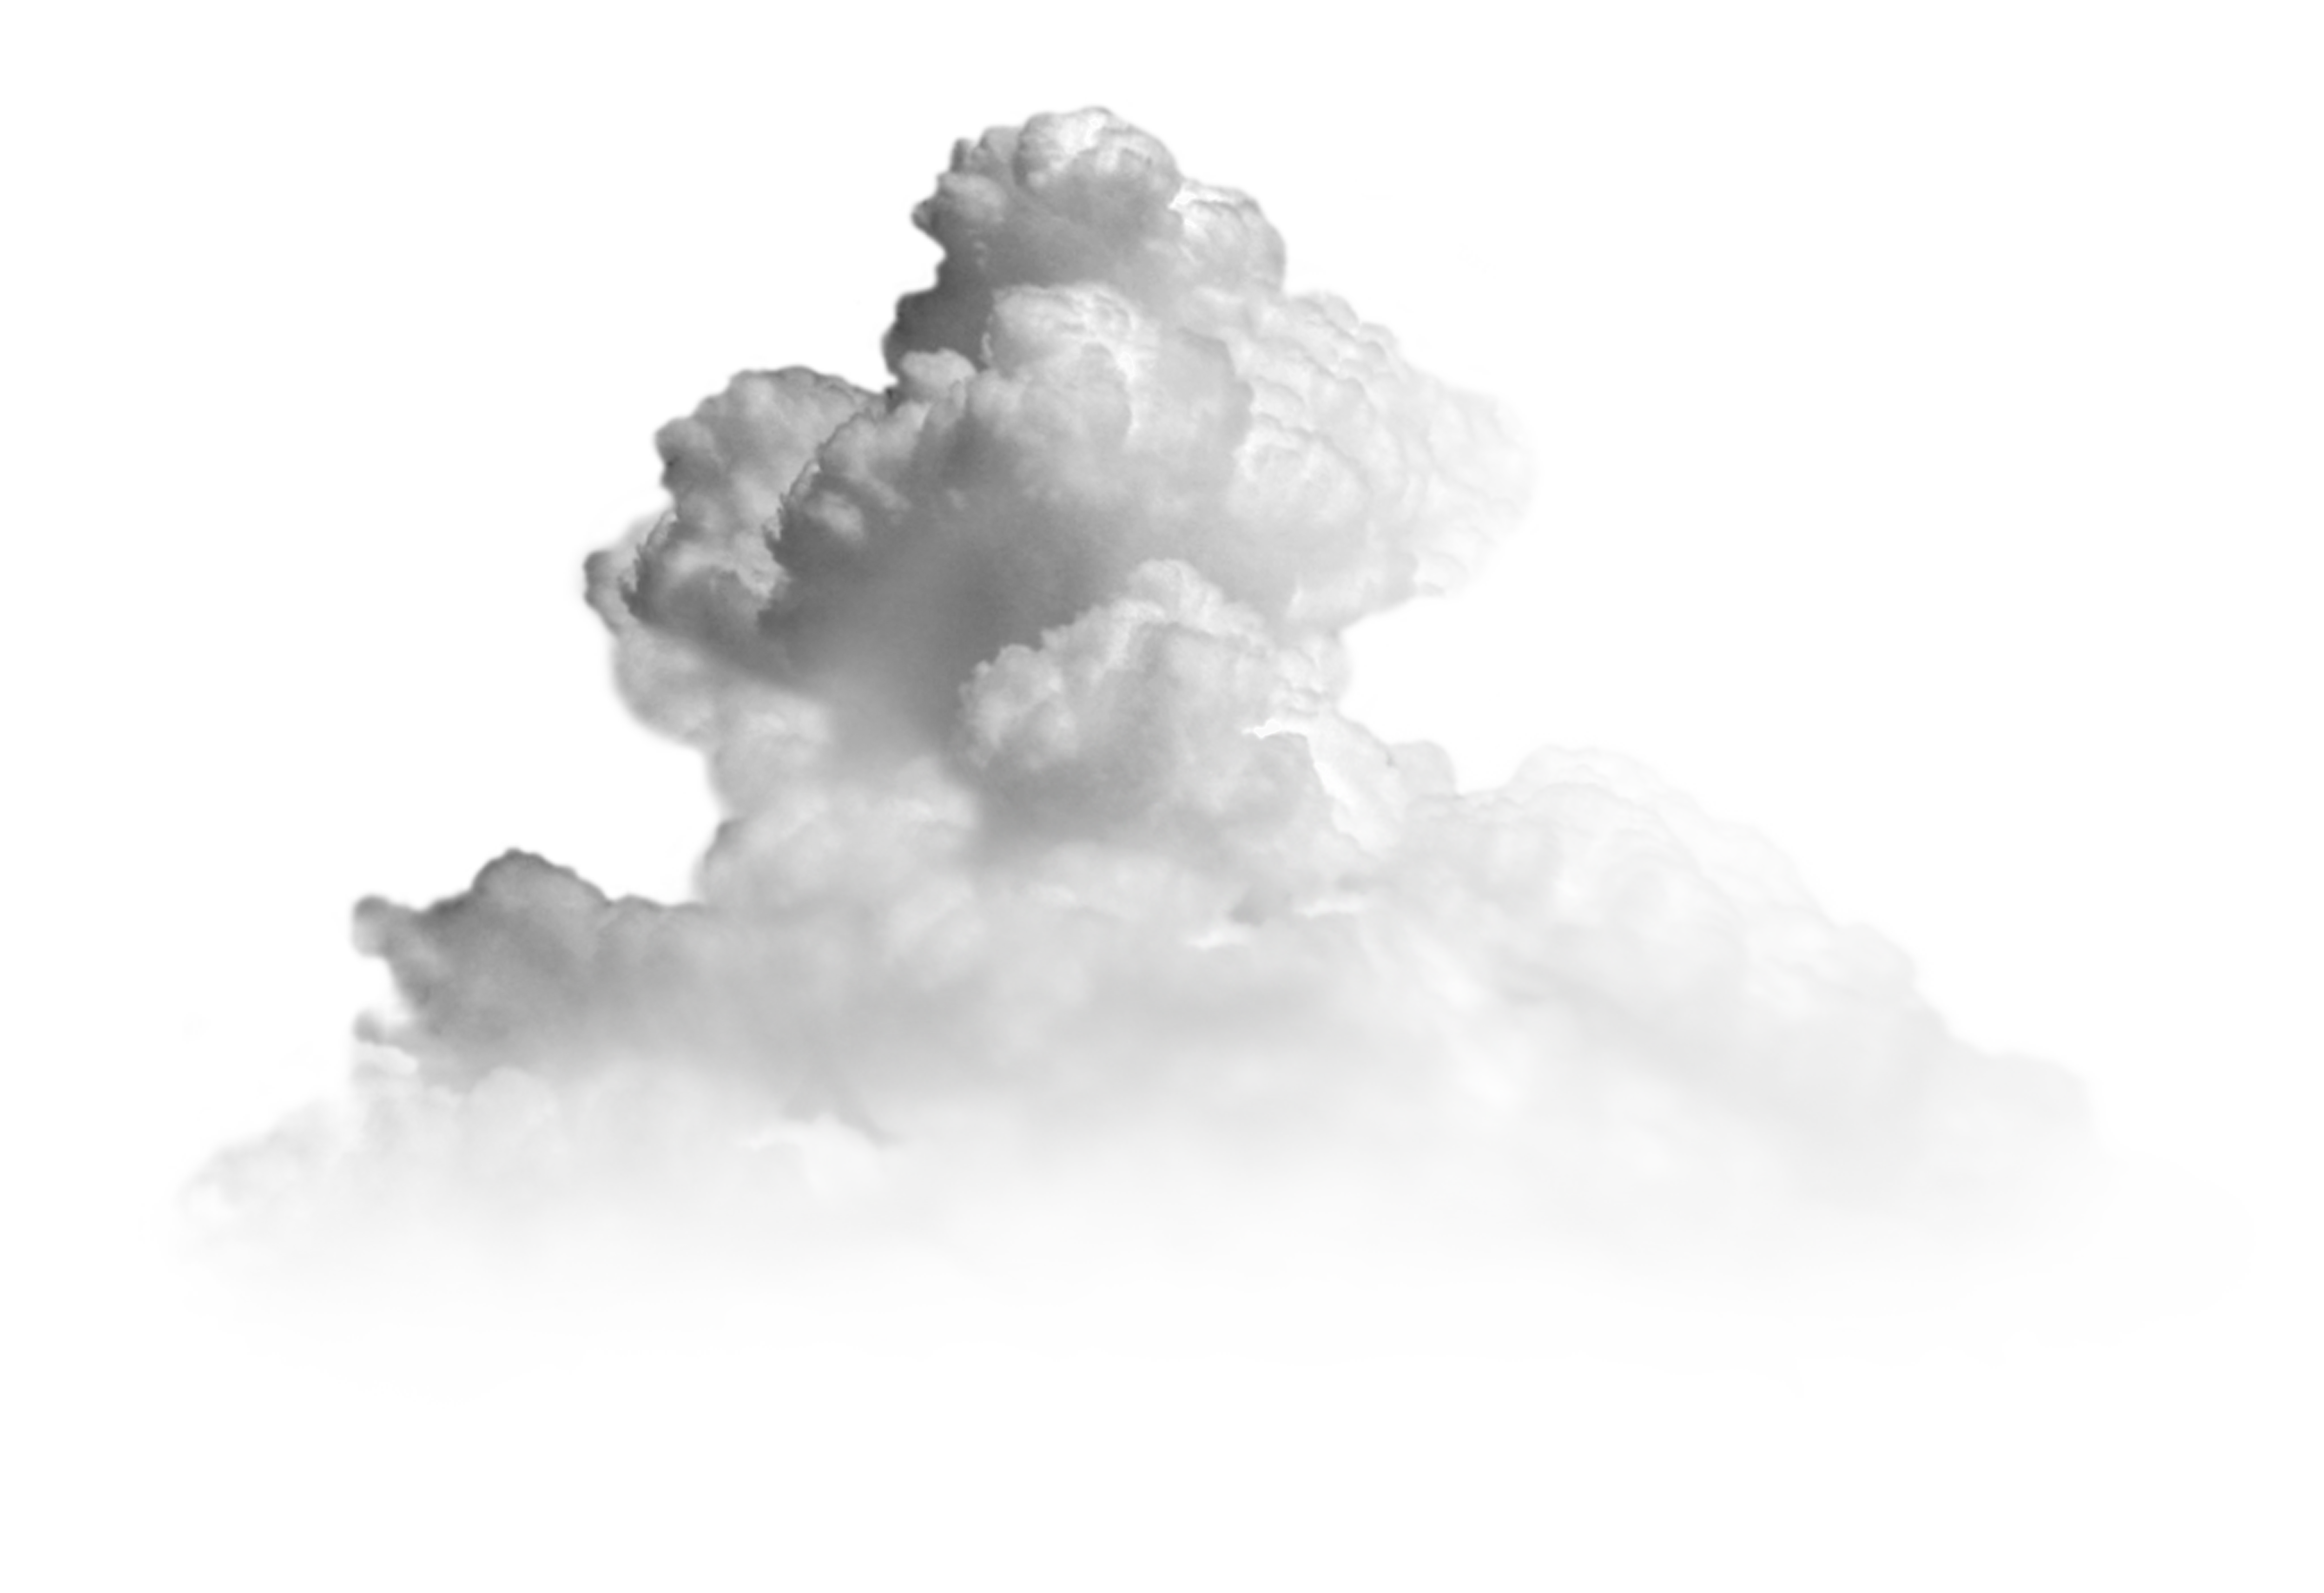 Cumulonimbus Cloud PNG Clipart - Best WEB Clipart